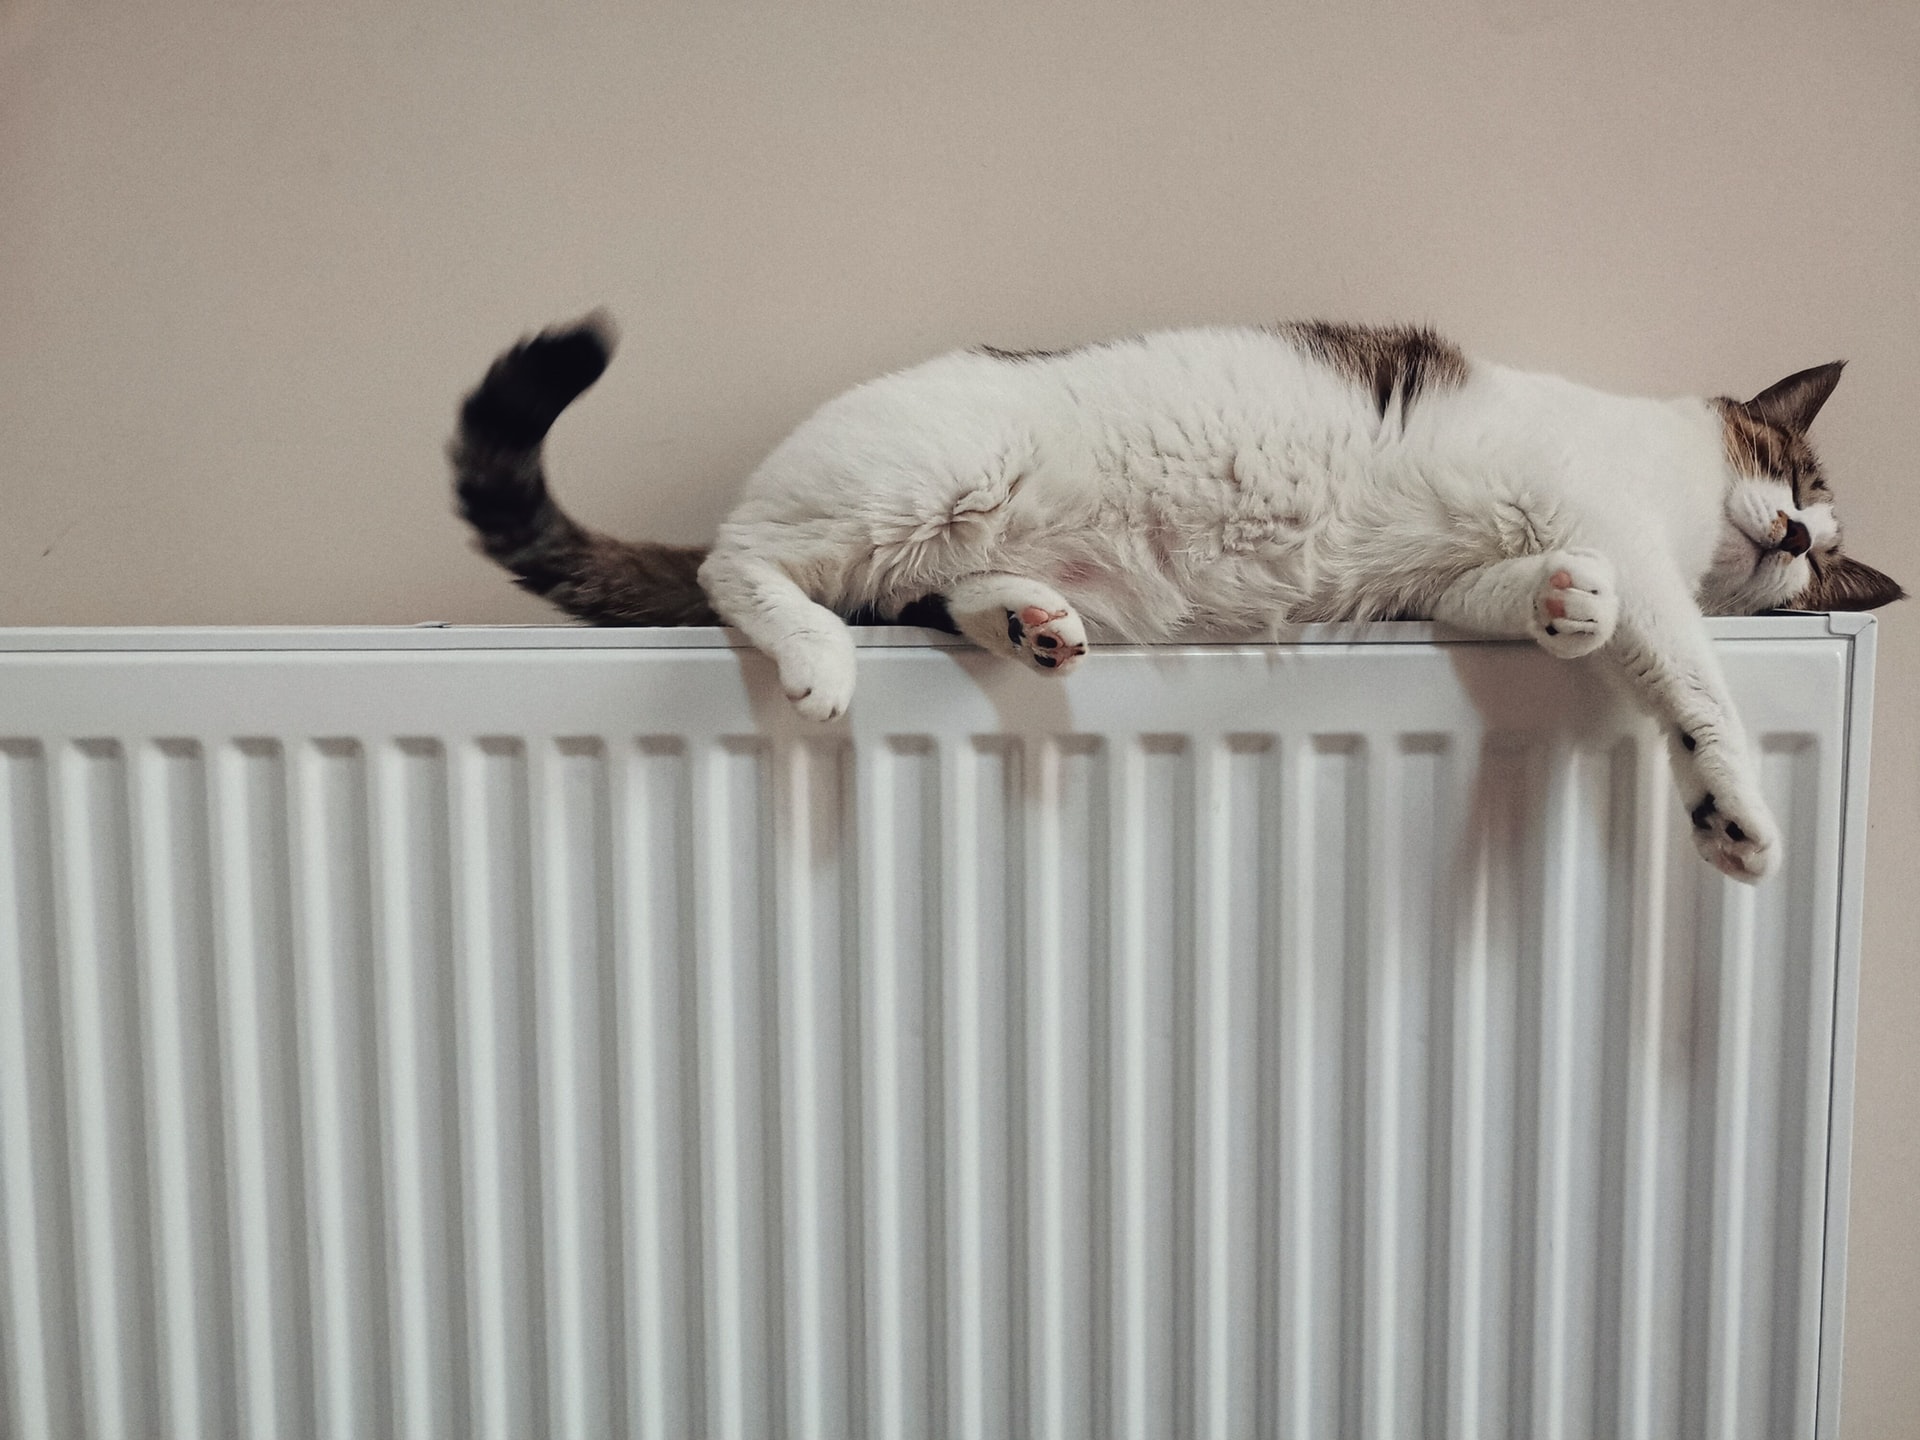 Cat on radiator